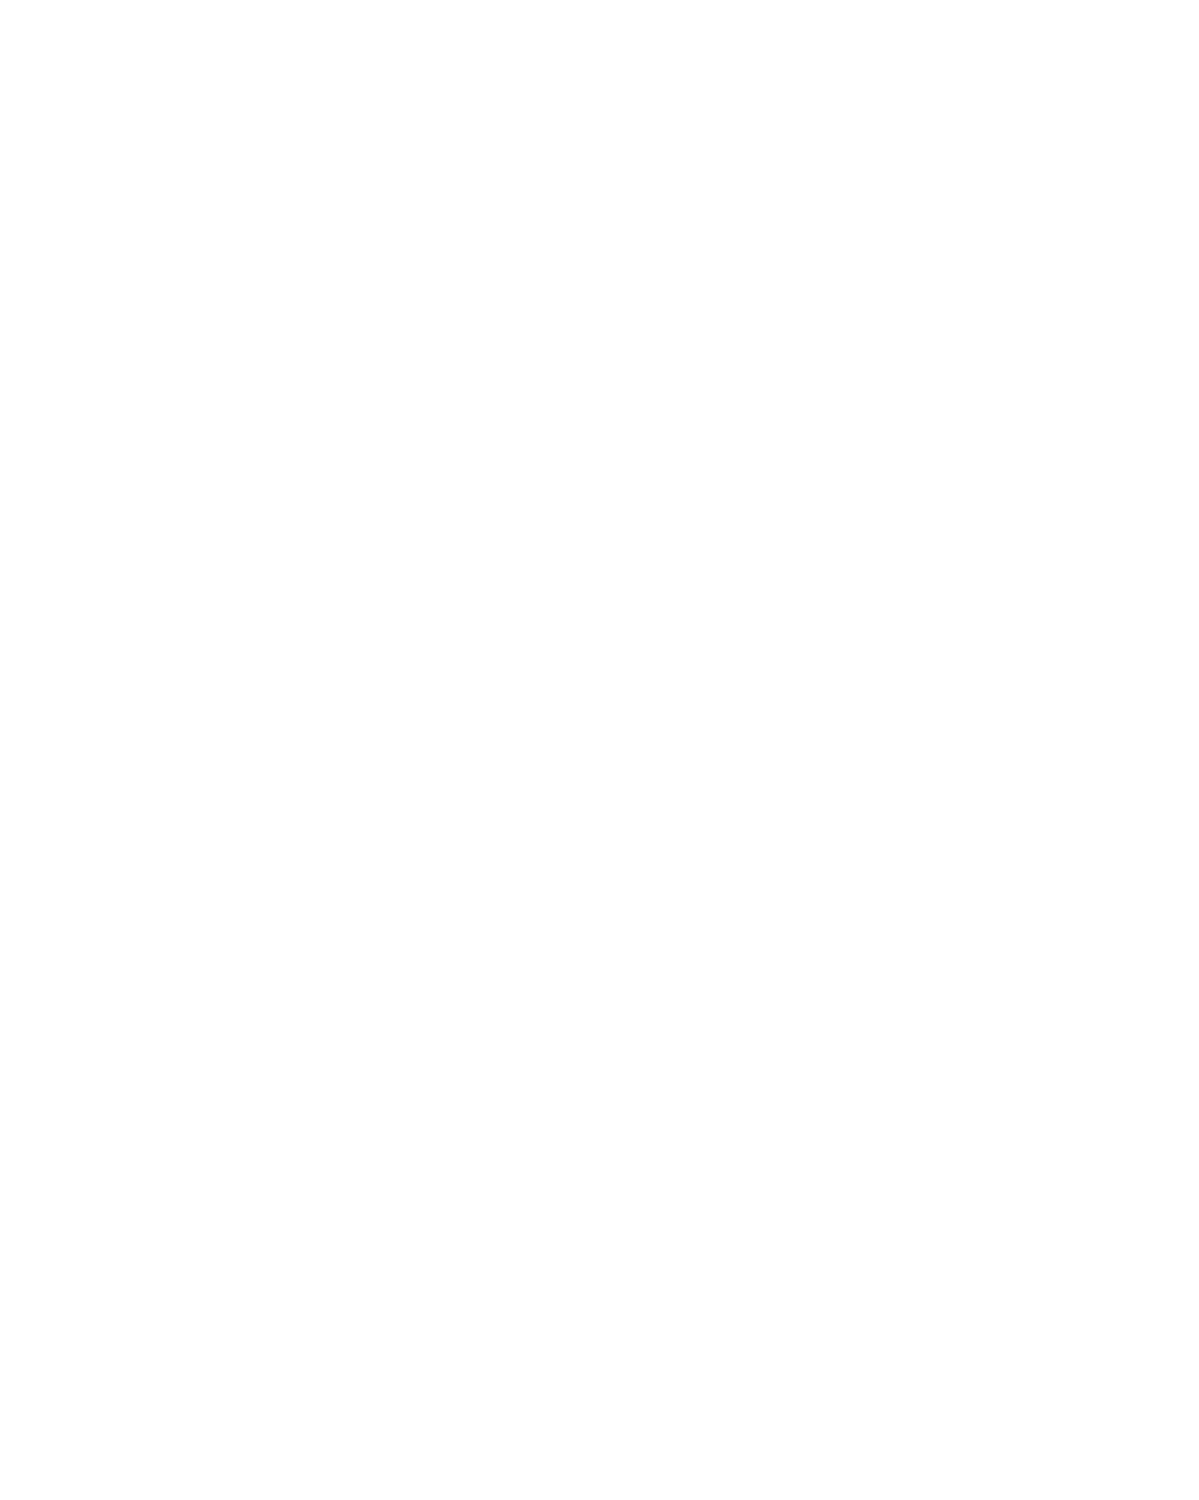 Pharma Material and Formulations